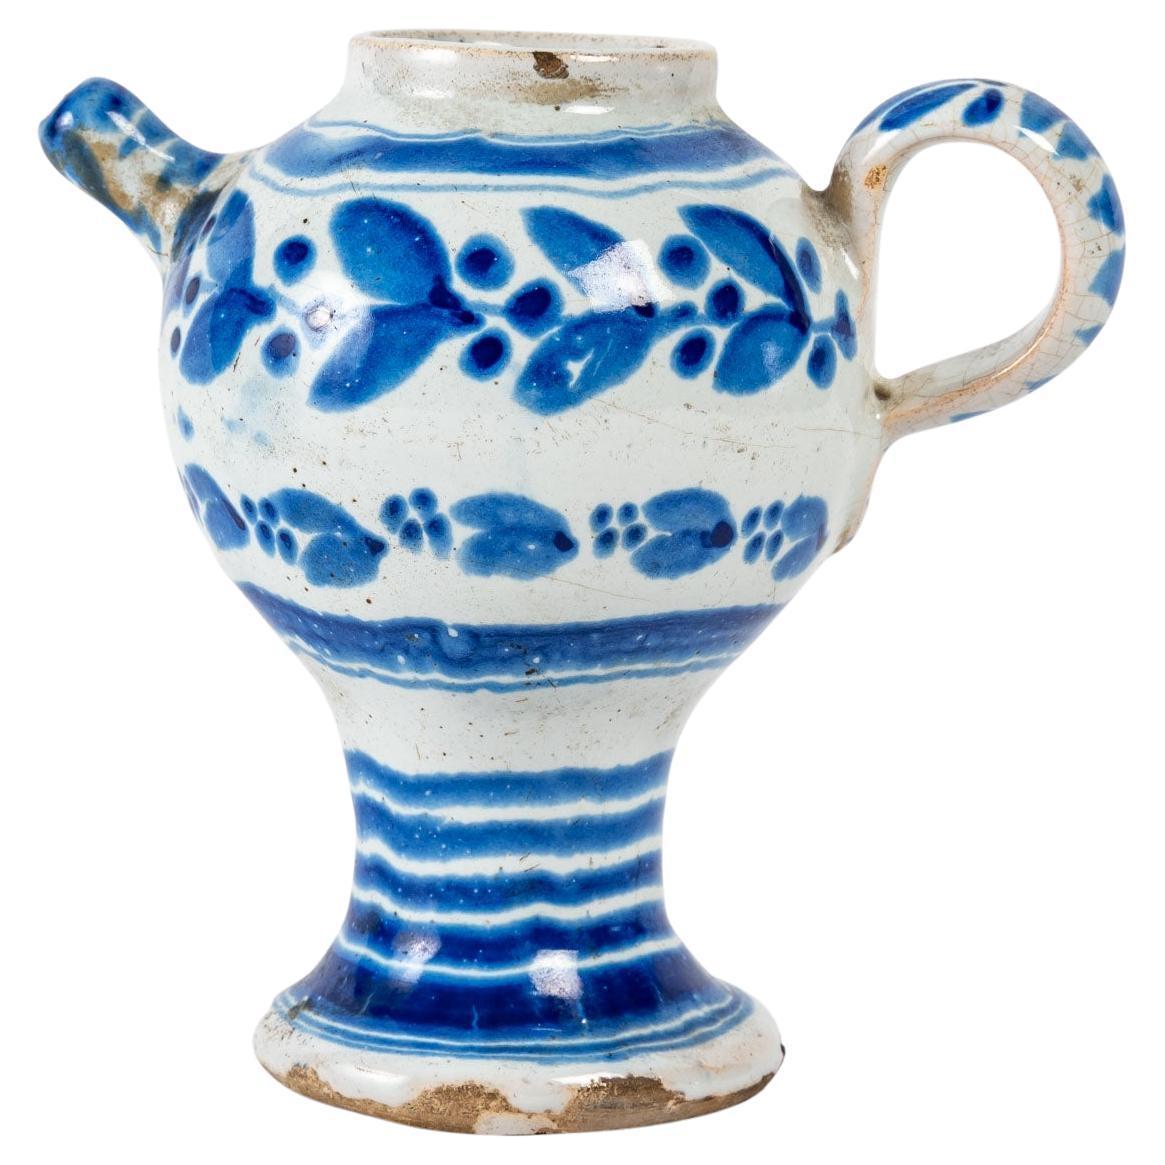 Small terracotta vase, 19th century
Small blue and white glazed terracotta vase, 19th century, folk art.
H: 14 cm, W: 14 cm, D: 10 cm